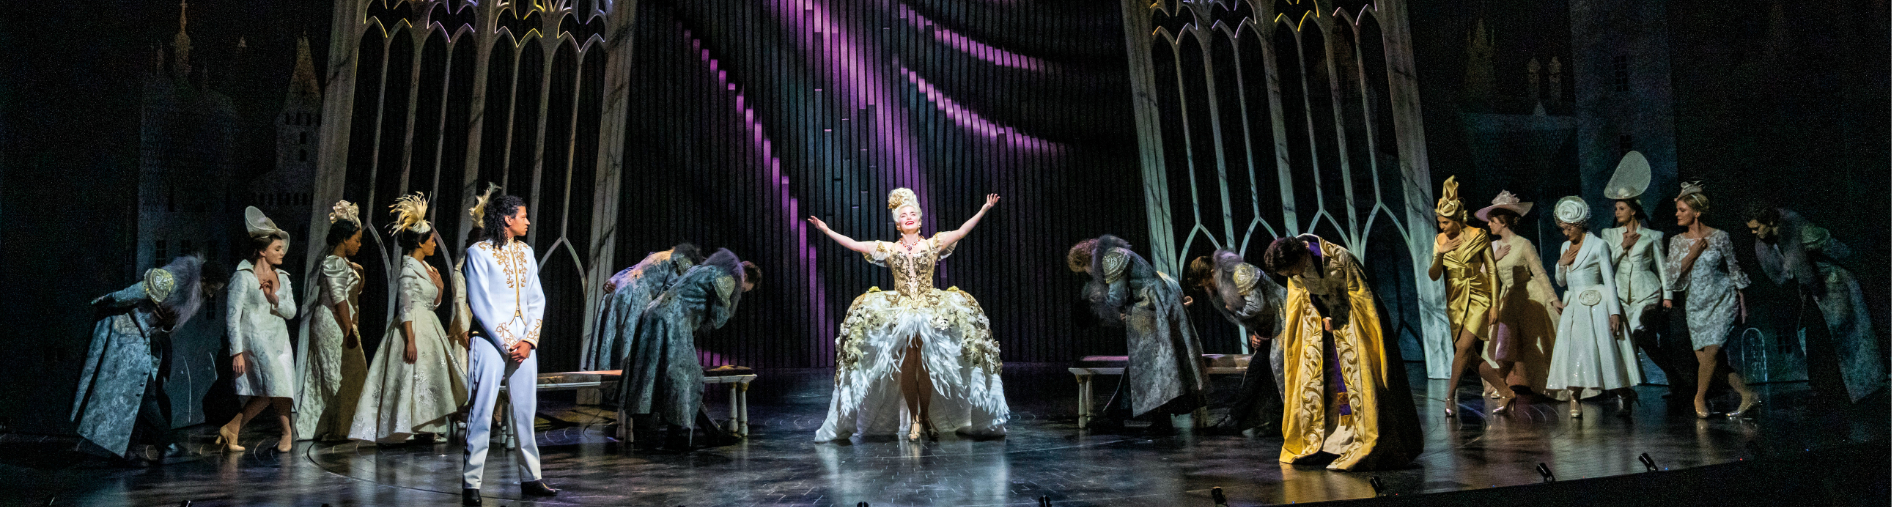 Unusual transforms Gillian Lynne Theatre into Bellville for Andrew Lloyd Webber's Cinderella